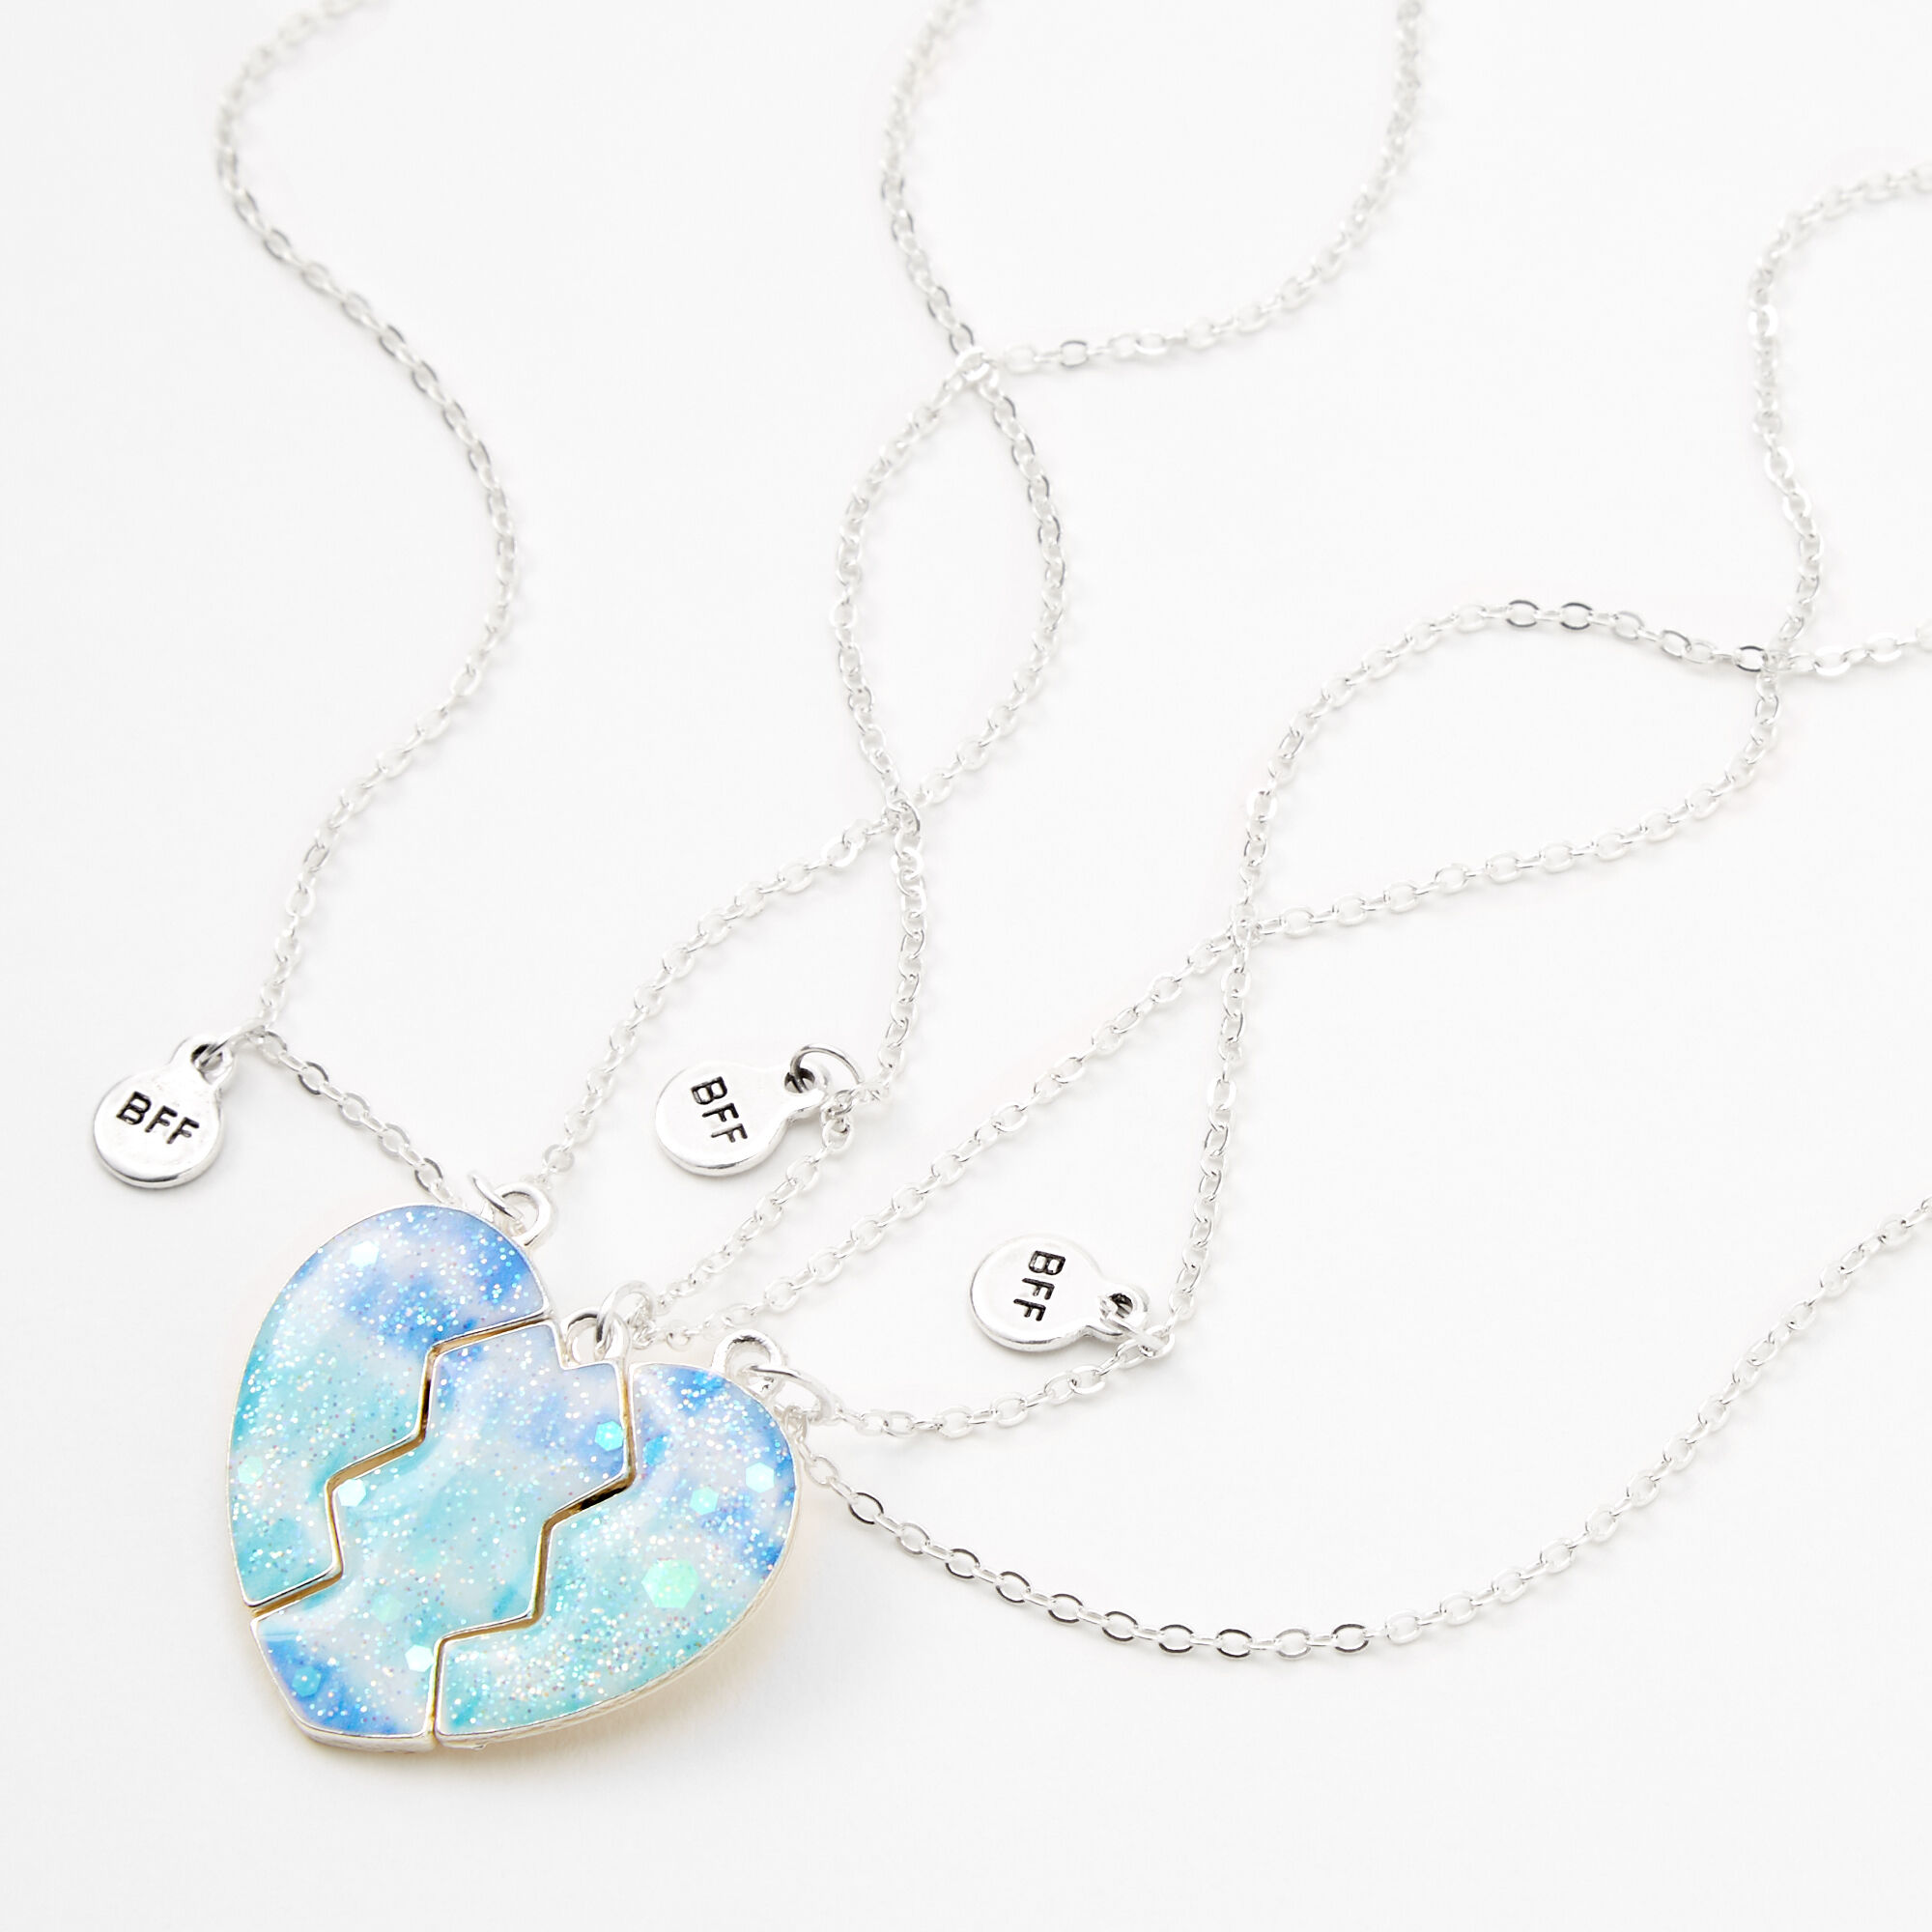 Best Friends Necklaces 3 piece share Pendants and Chains BFF besties friend  set | eBay